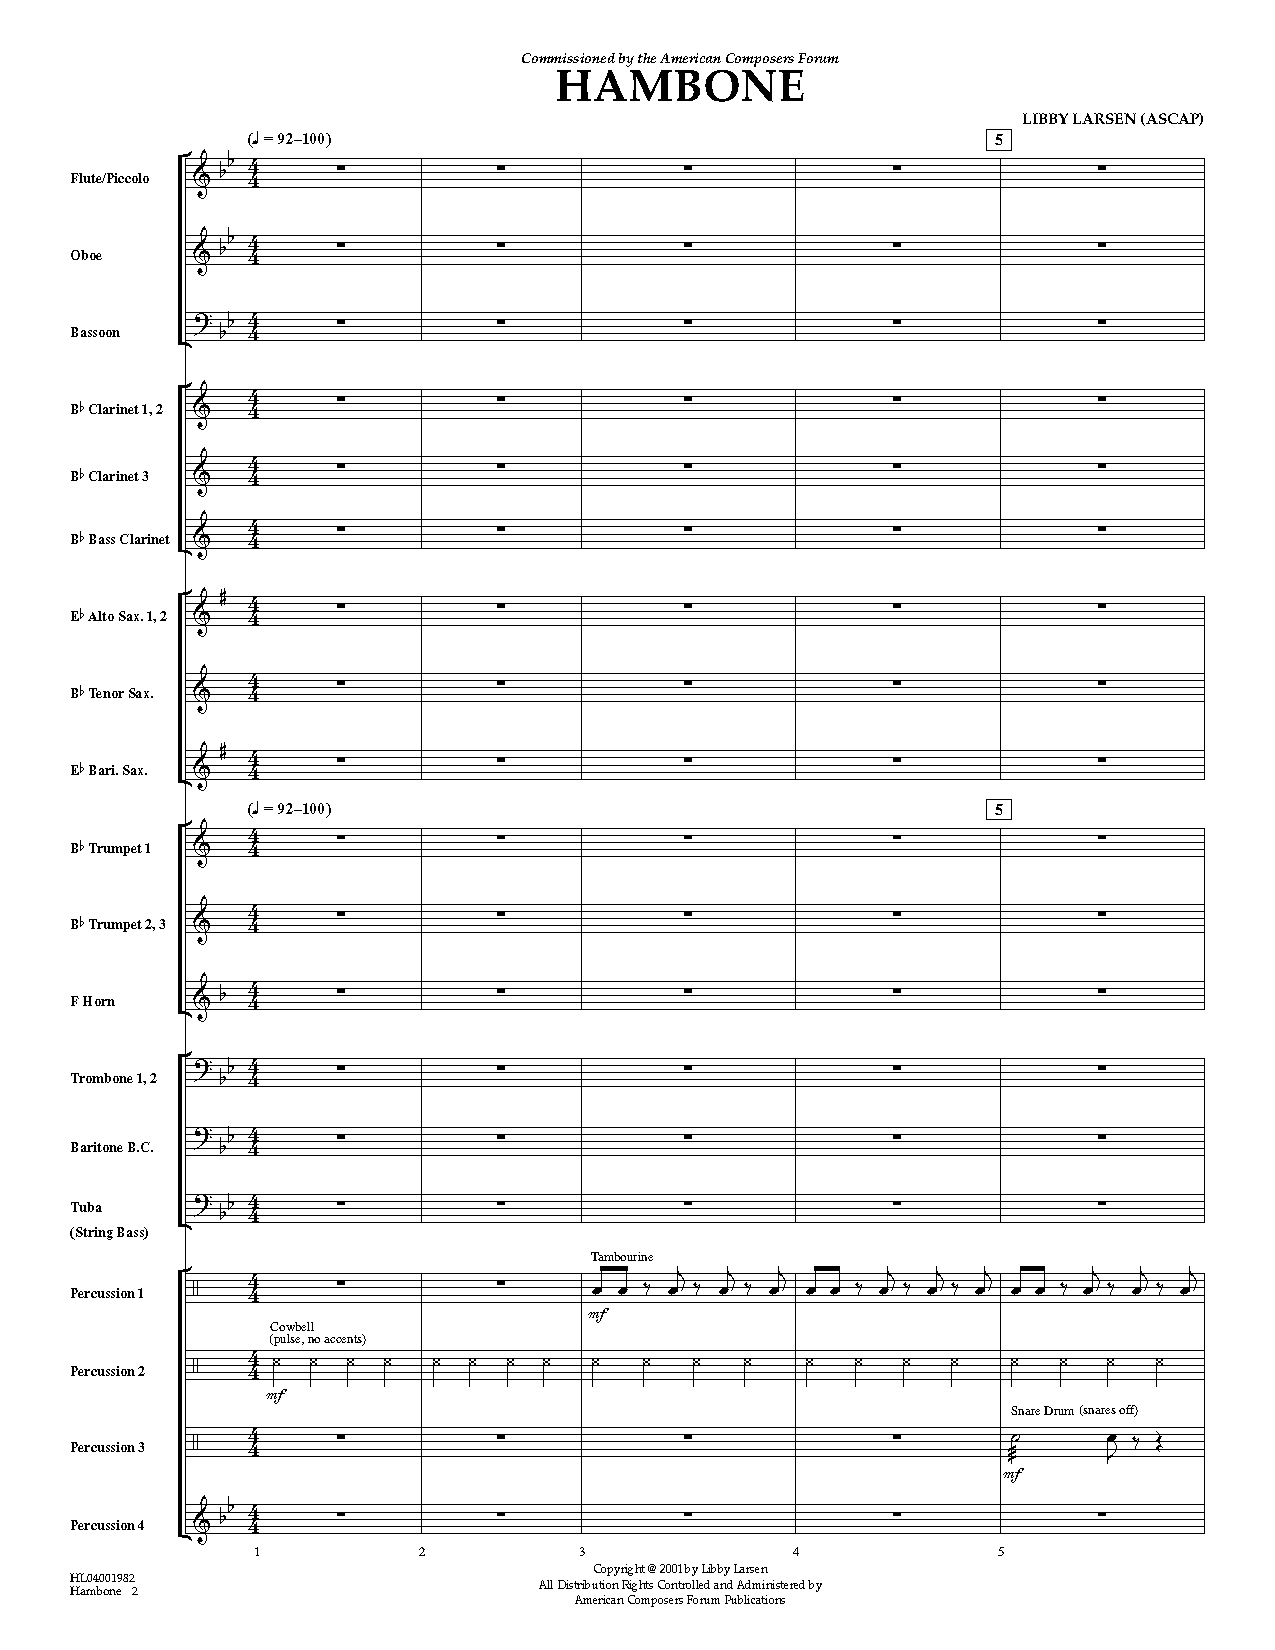 Libby Larsen Hambone - Full Score Sheet Music Notes & Chords for Concert Band - Download or Print PDF